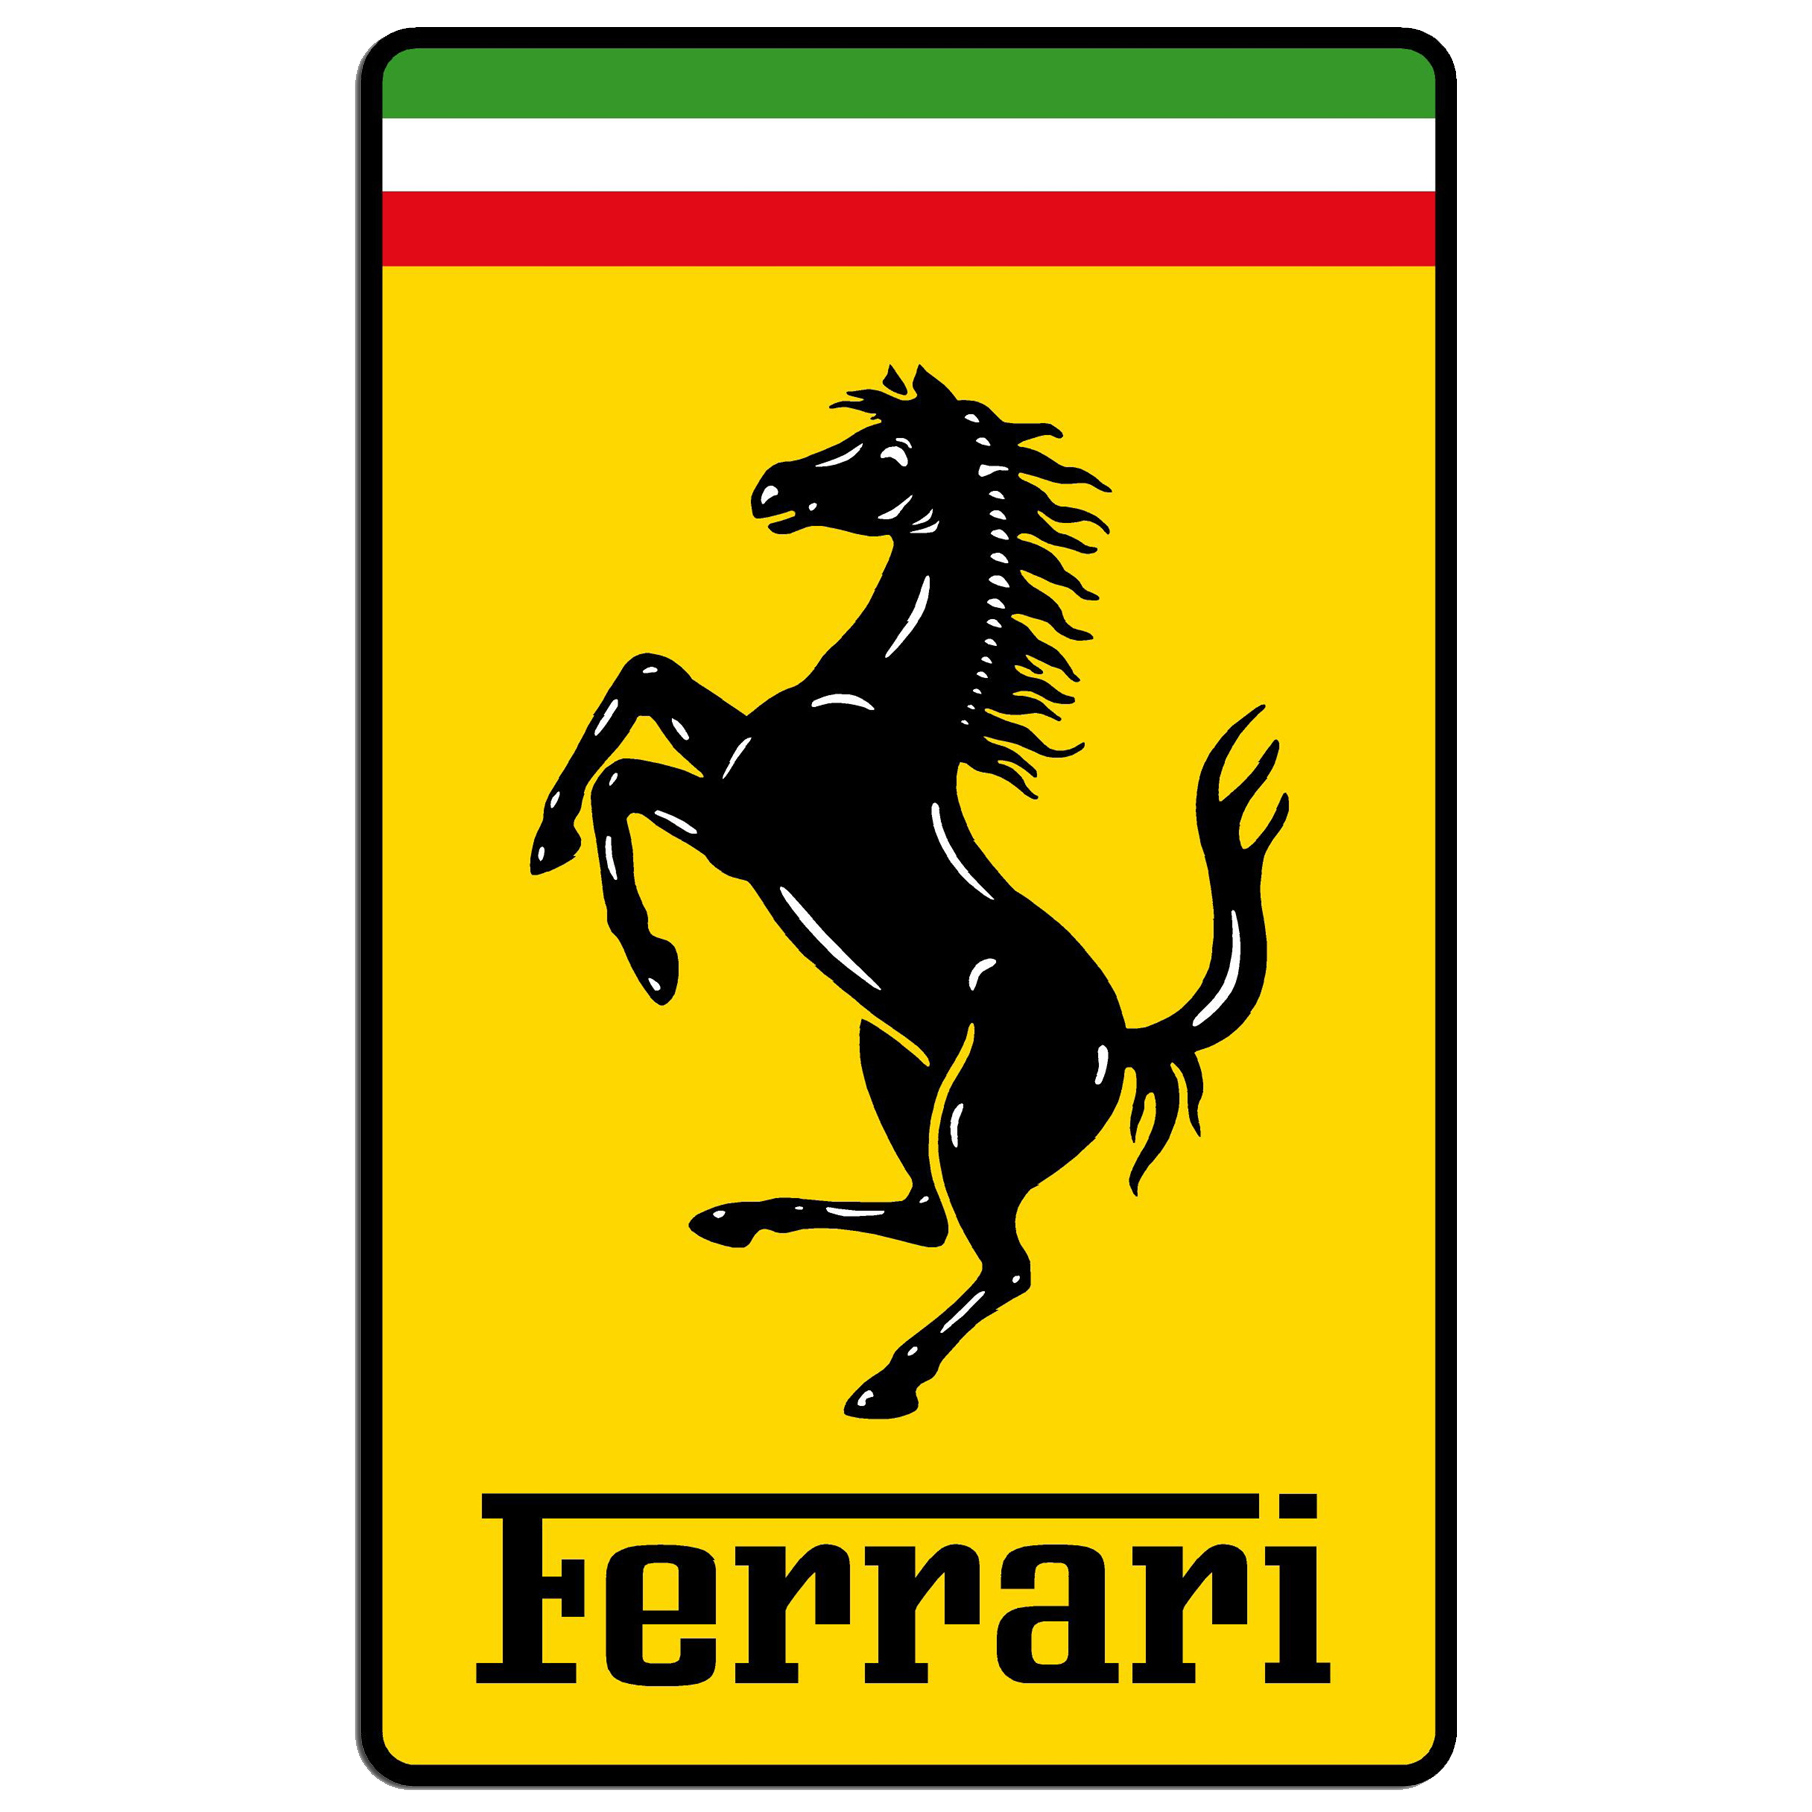 Ferrari 308 (1974 - 1985) for sale